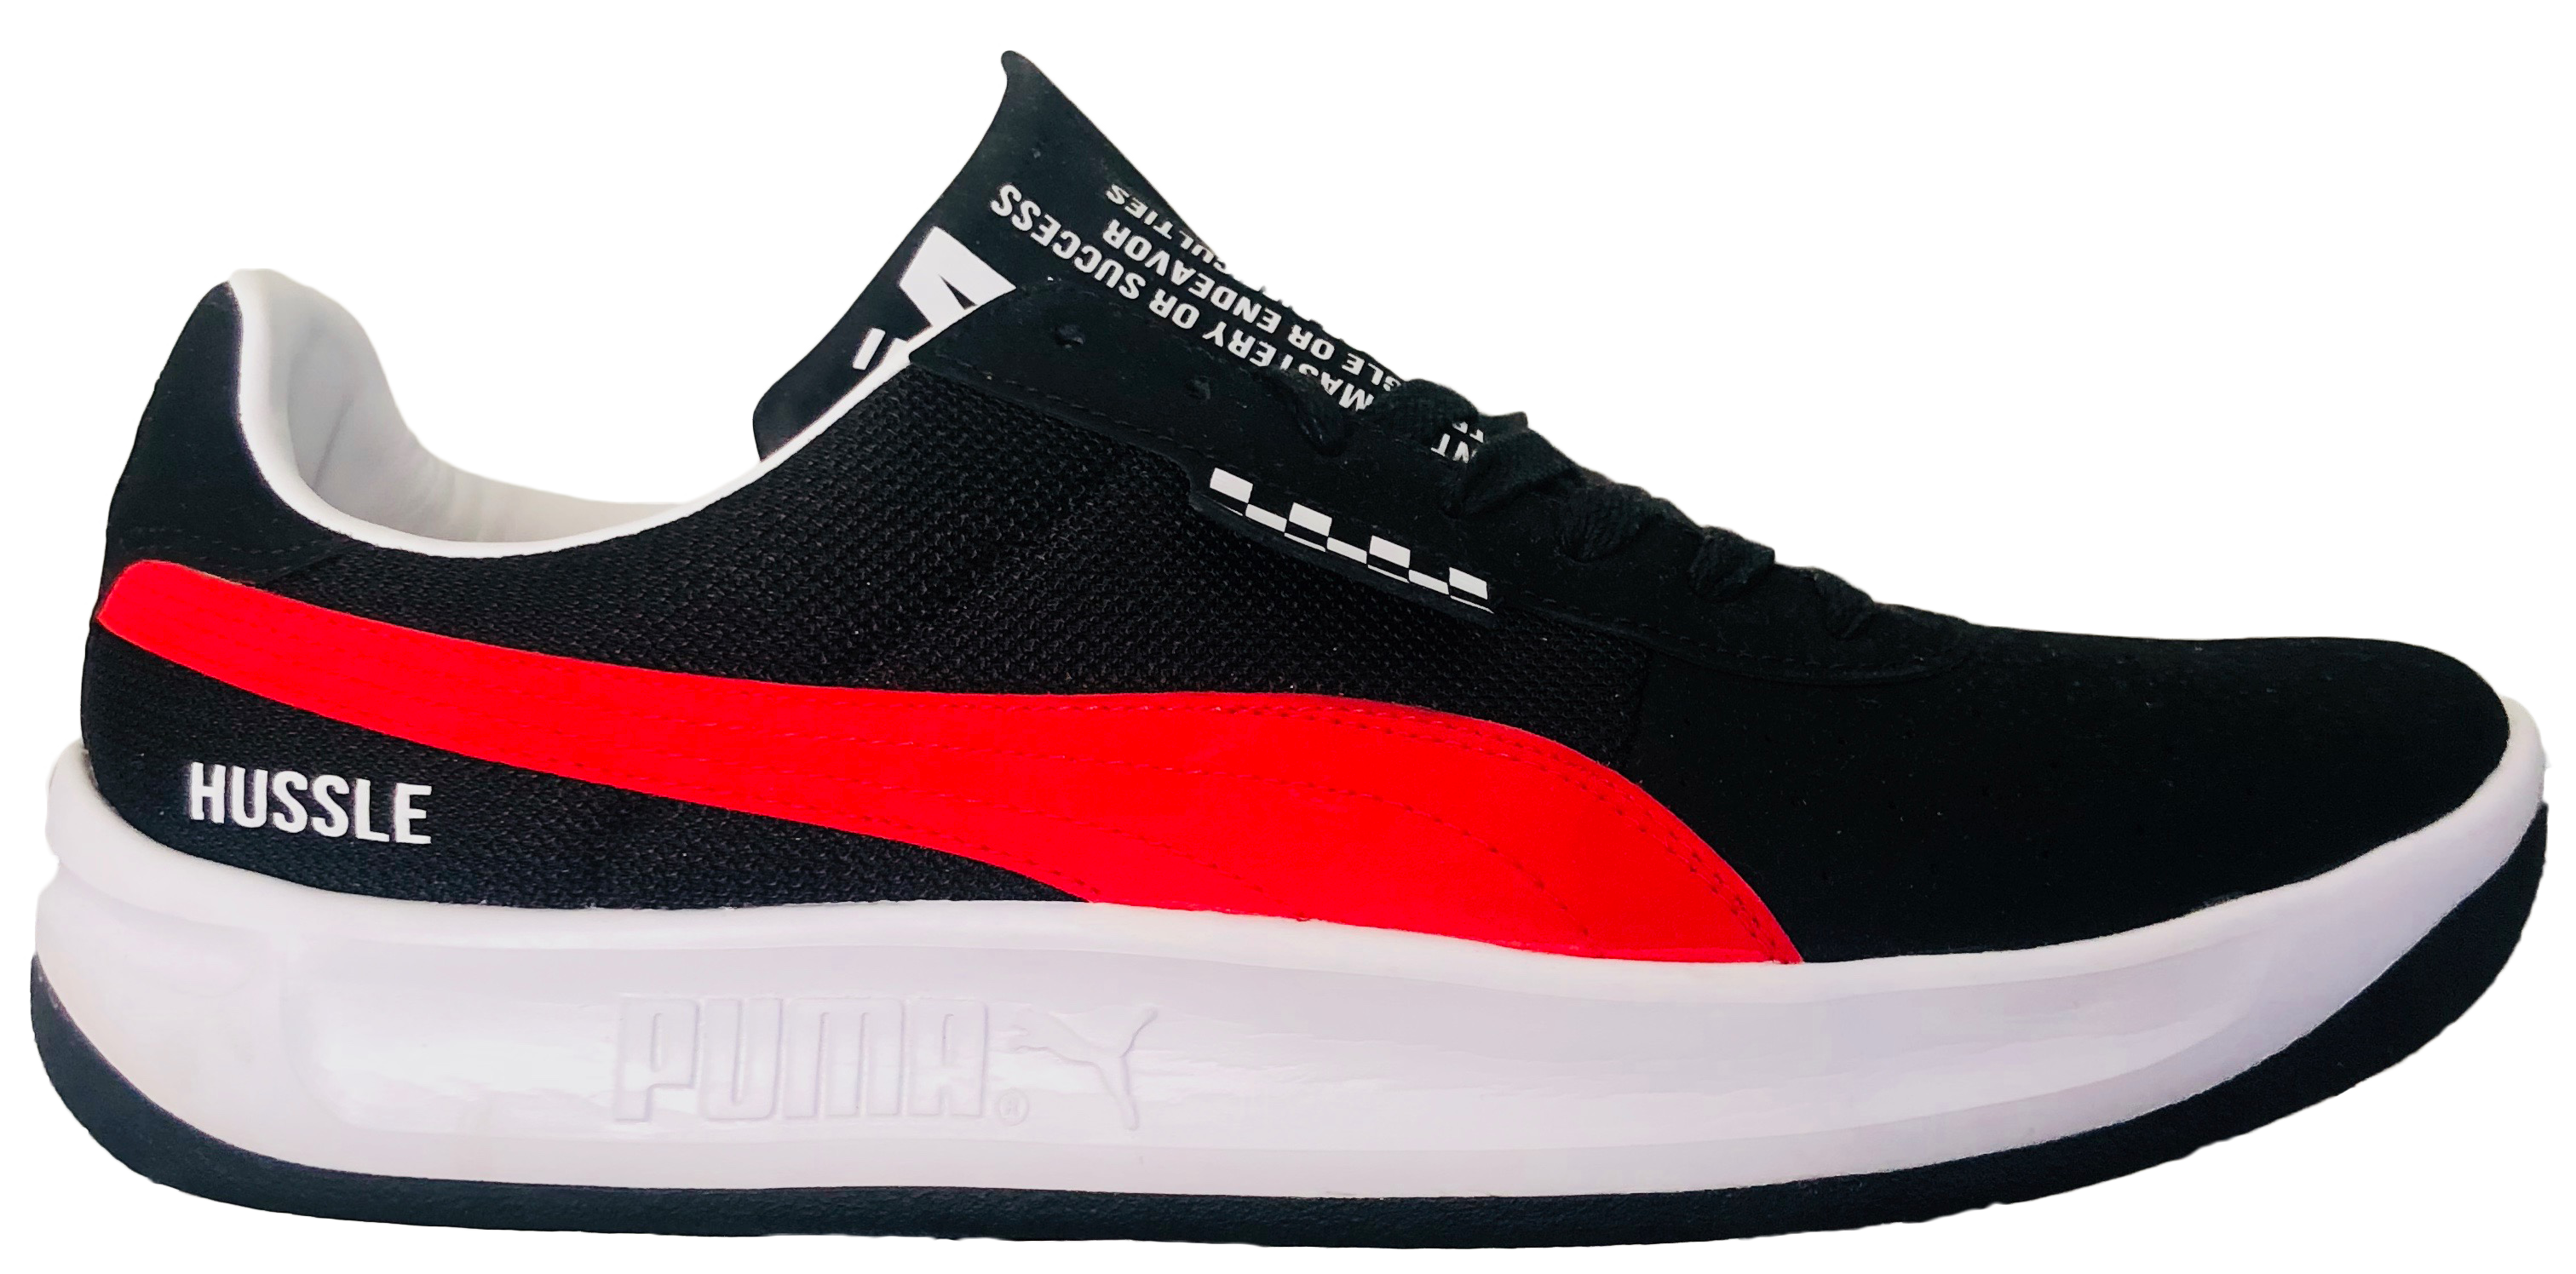 puma marathon shoes